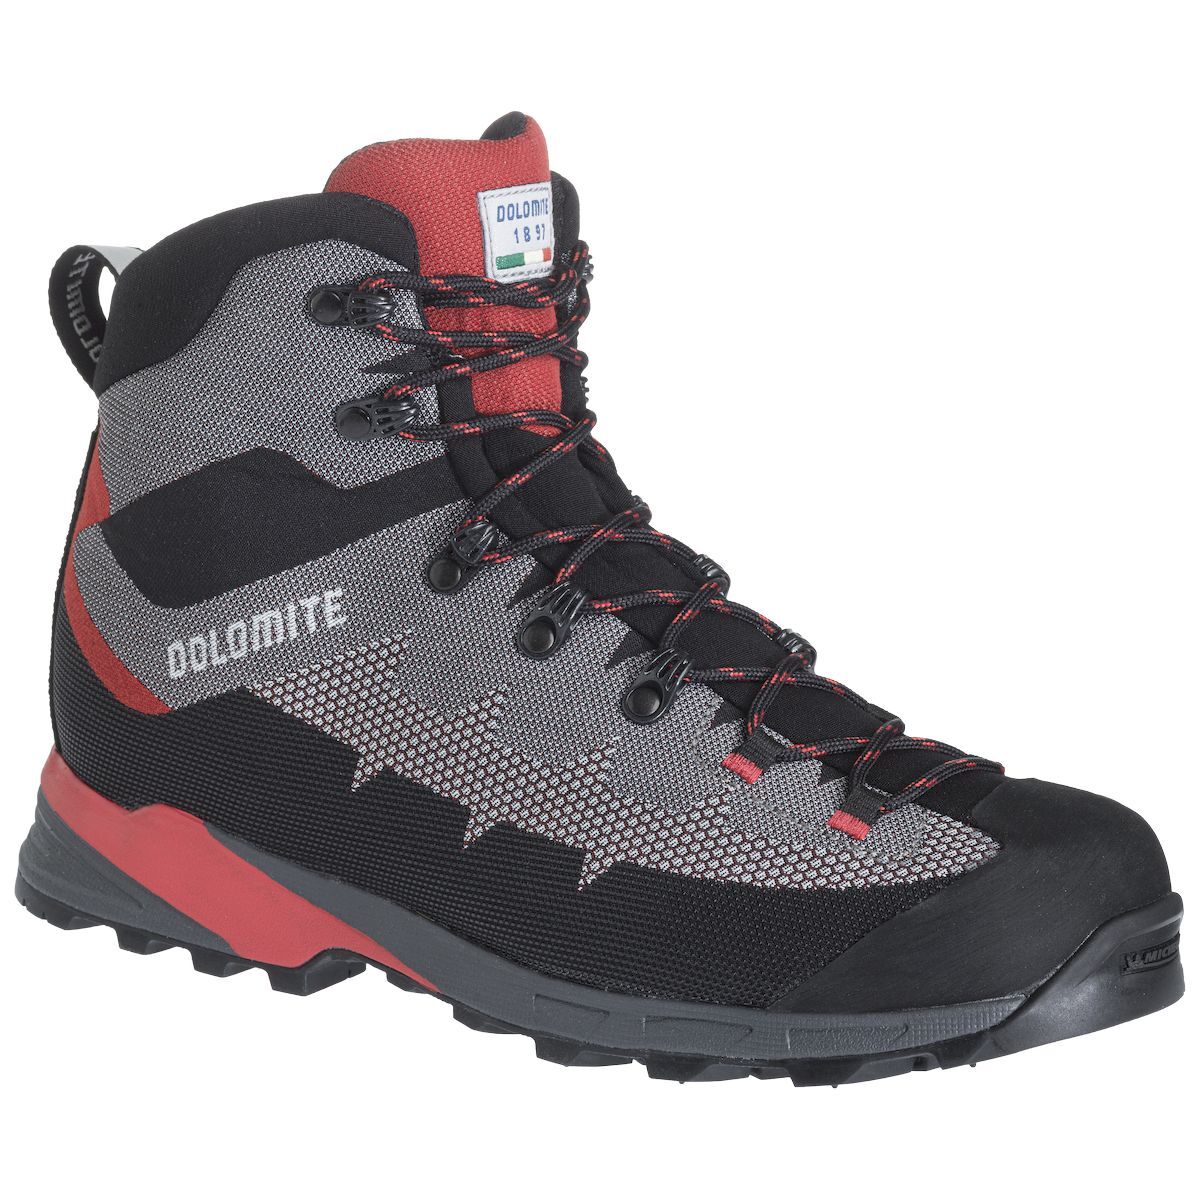 Dolomite Steinbock Wt GTX 2.0 - Hiking boots - Men's